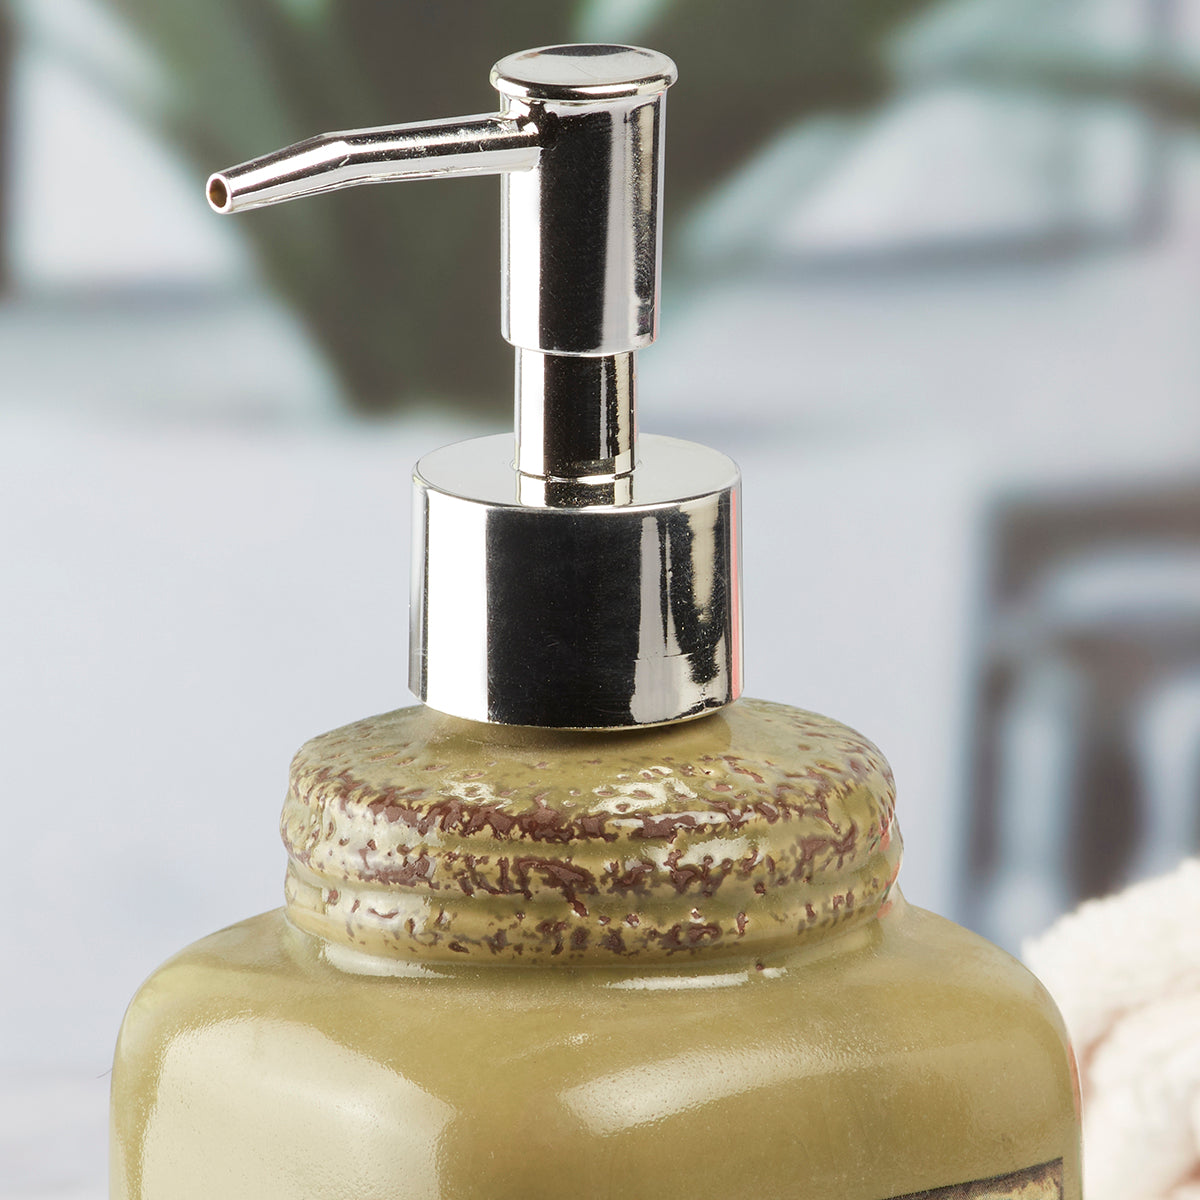 Ceramic Soap Dispenser handwash Pump for Bathroom, Set of 1, Green (6293)